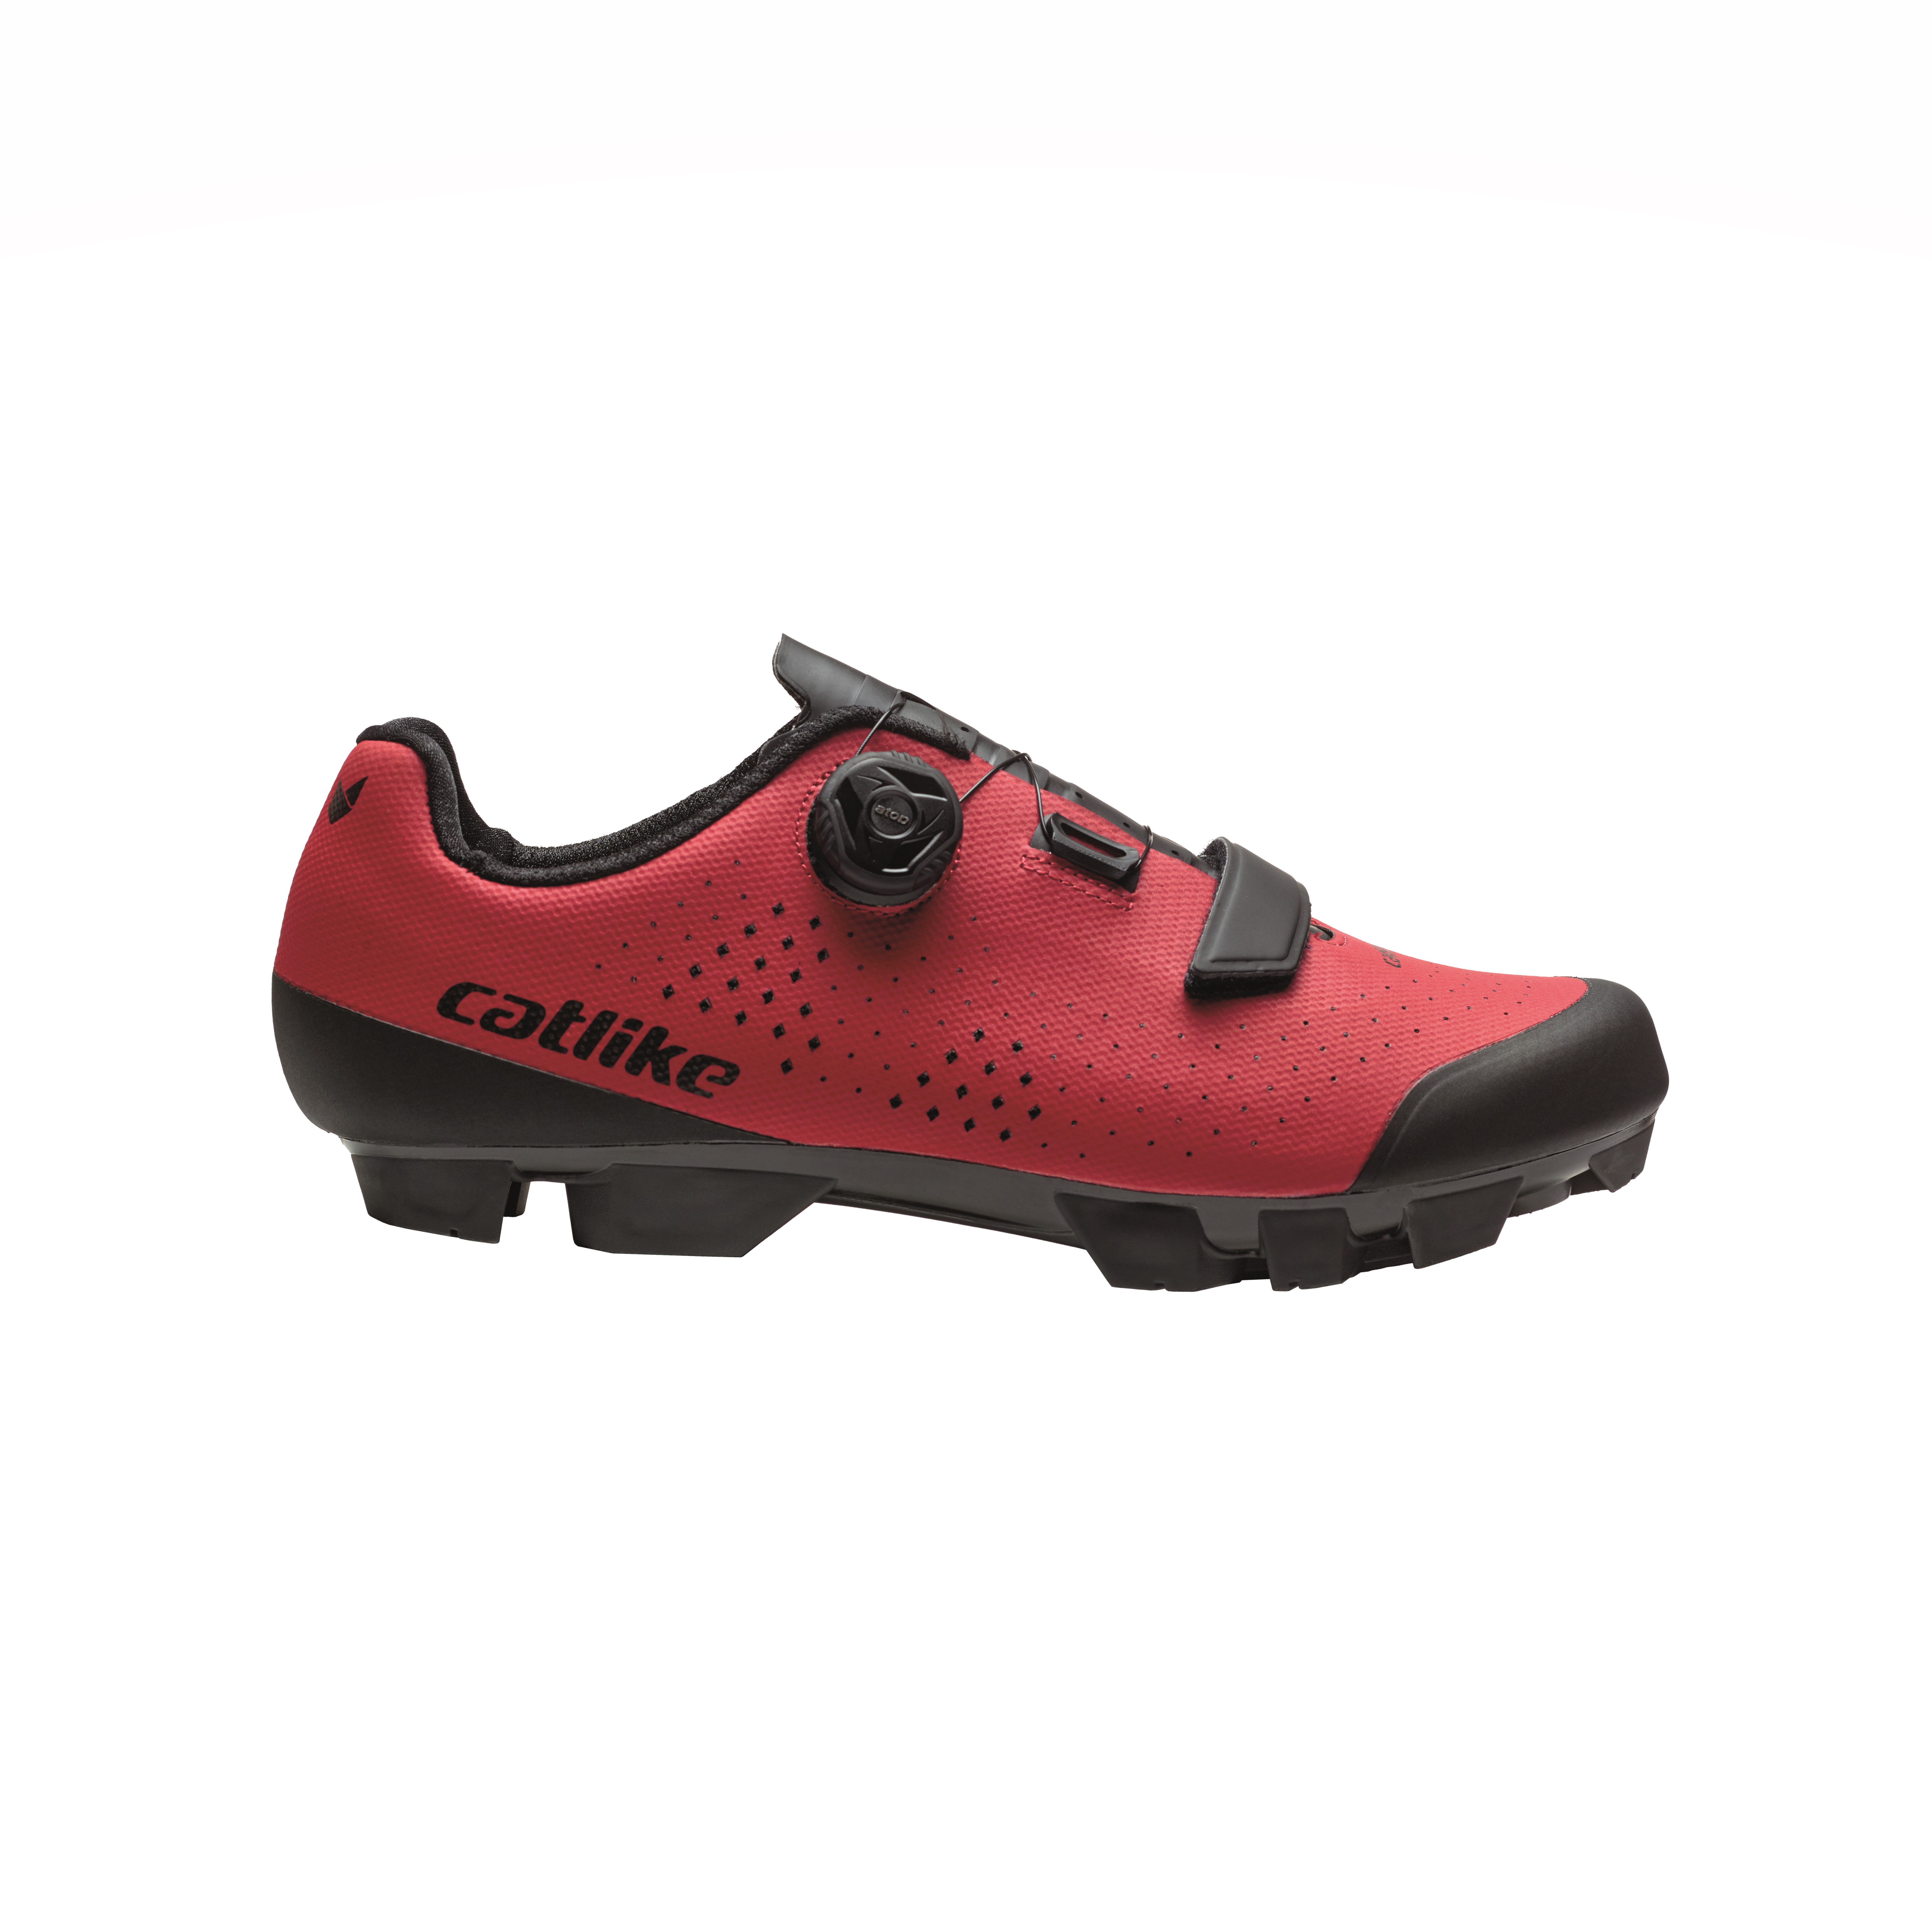 Sapatos Catlike Kompact´o X1 Mtb Vermelho - rojo - 